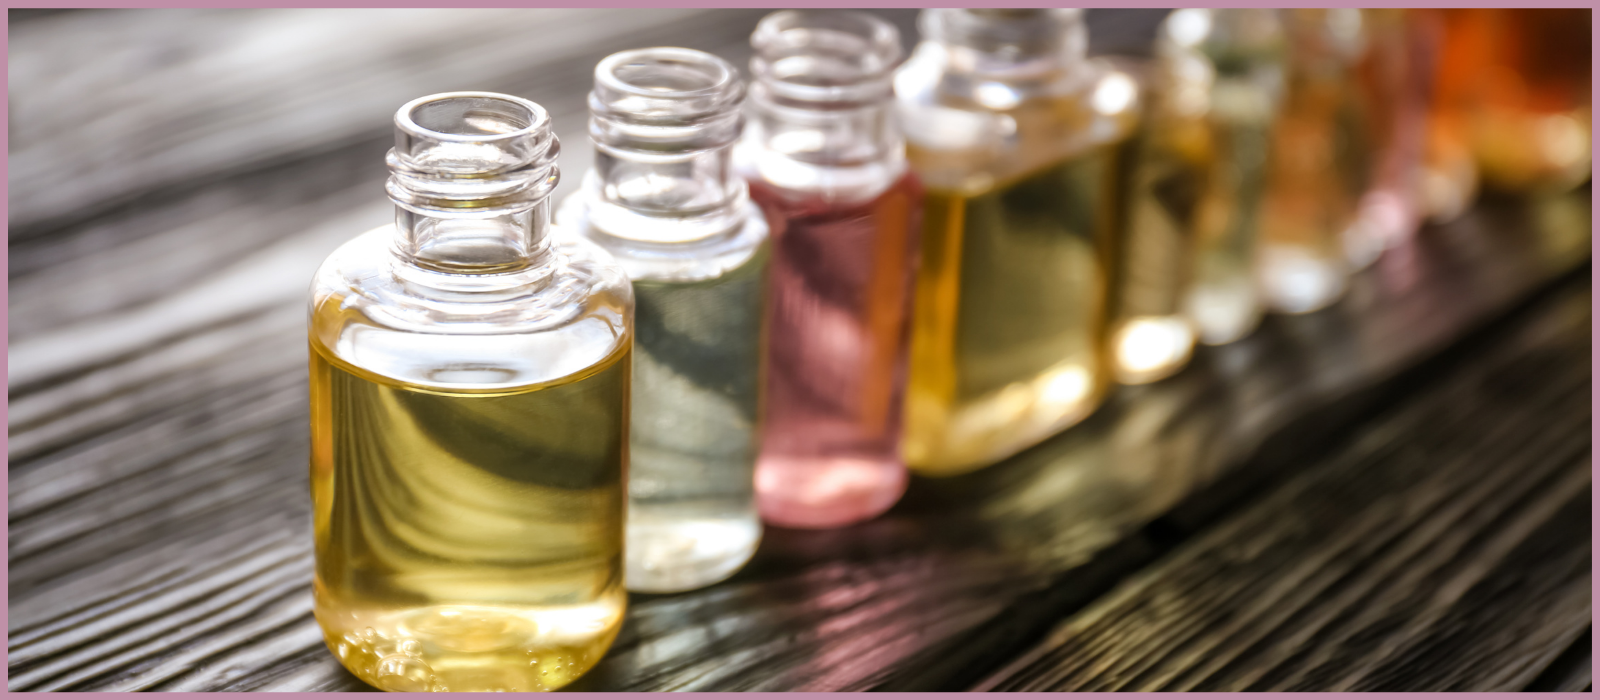 Fragrance Oil Versus Essential Oils? - The Soap Coach